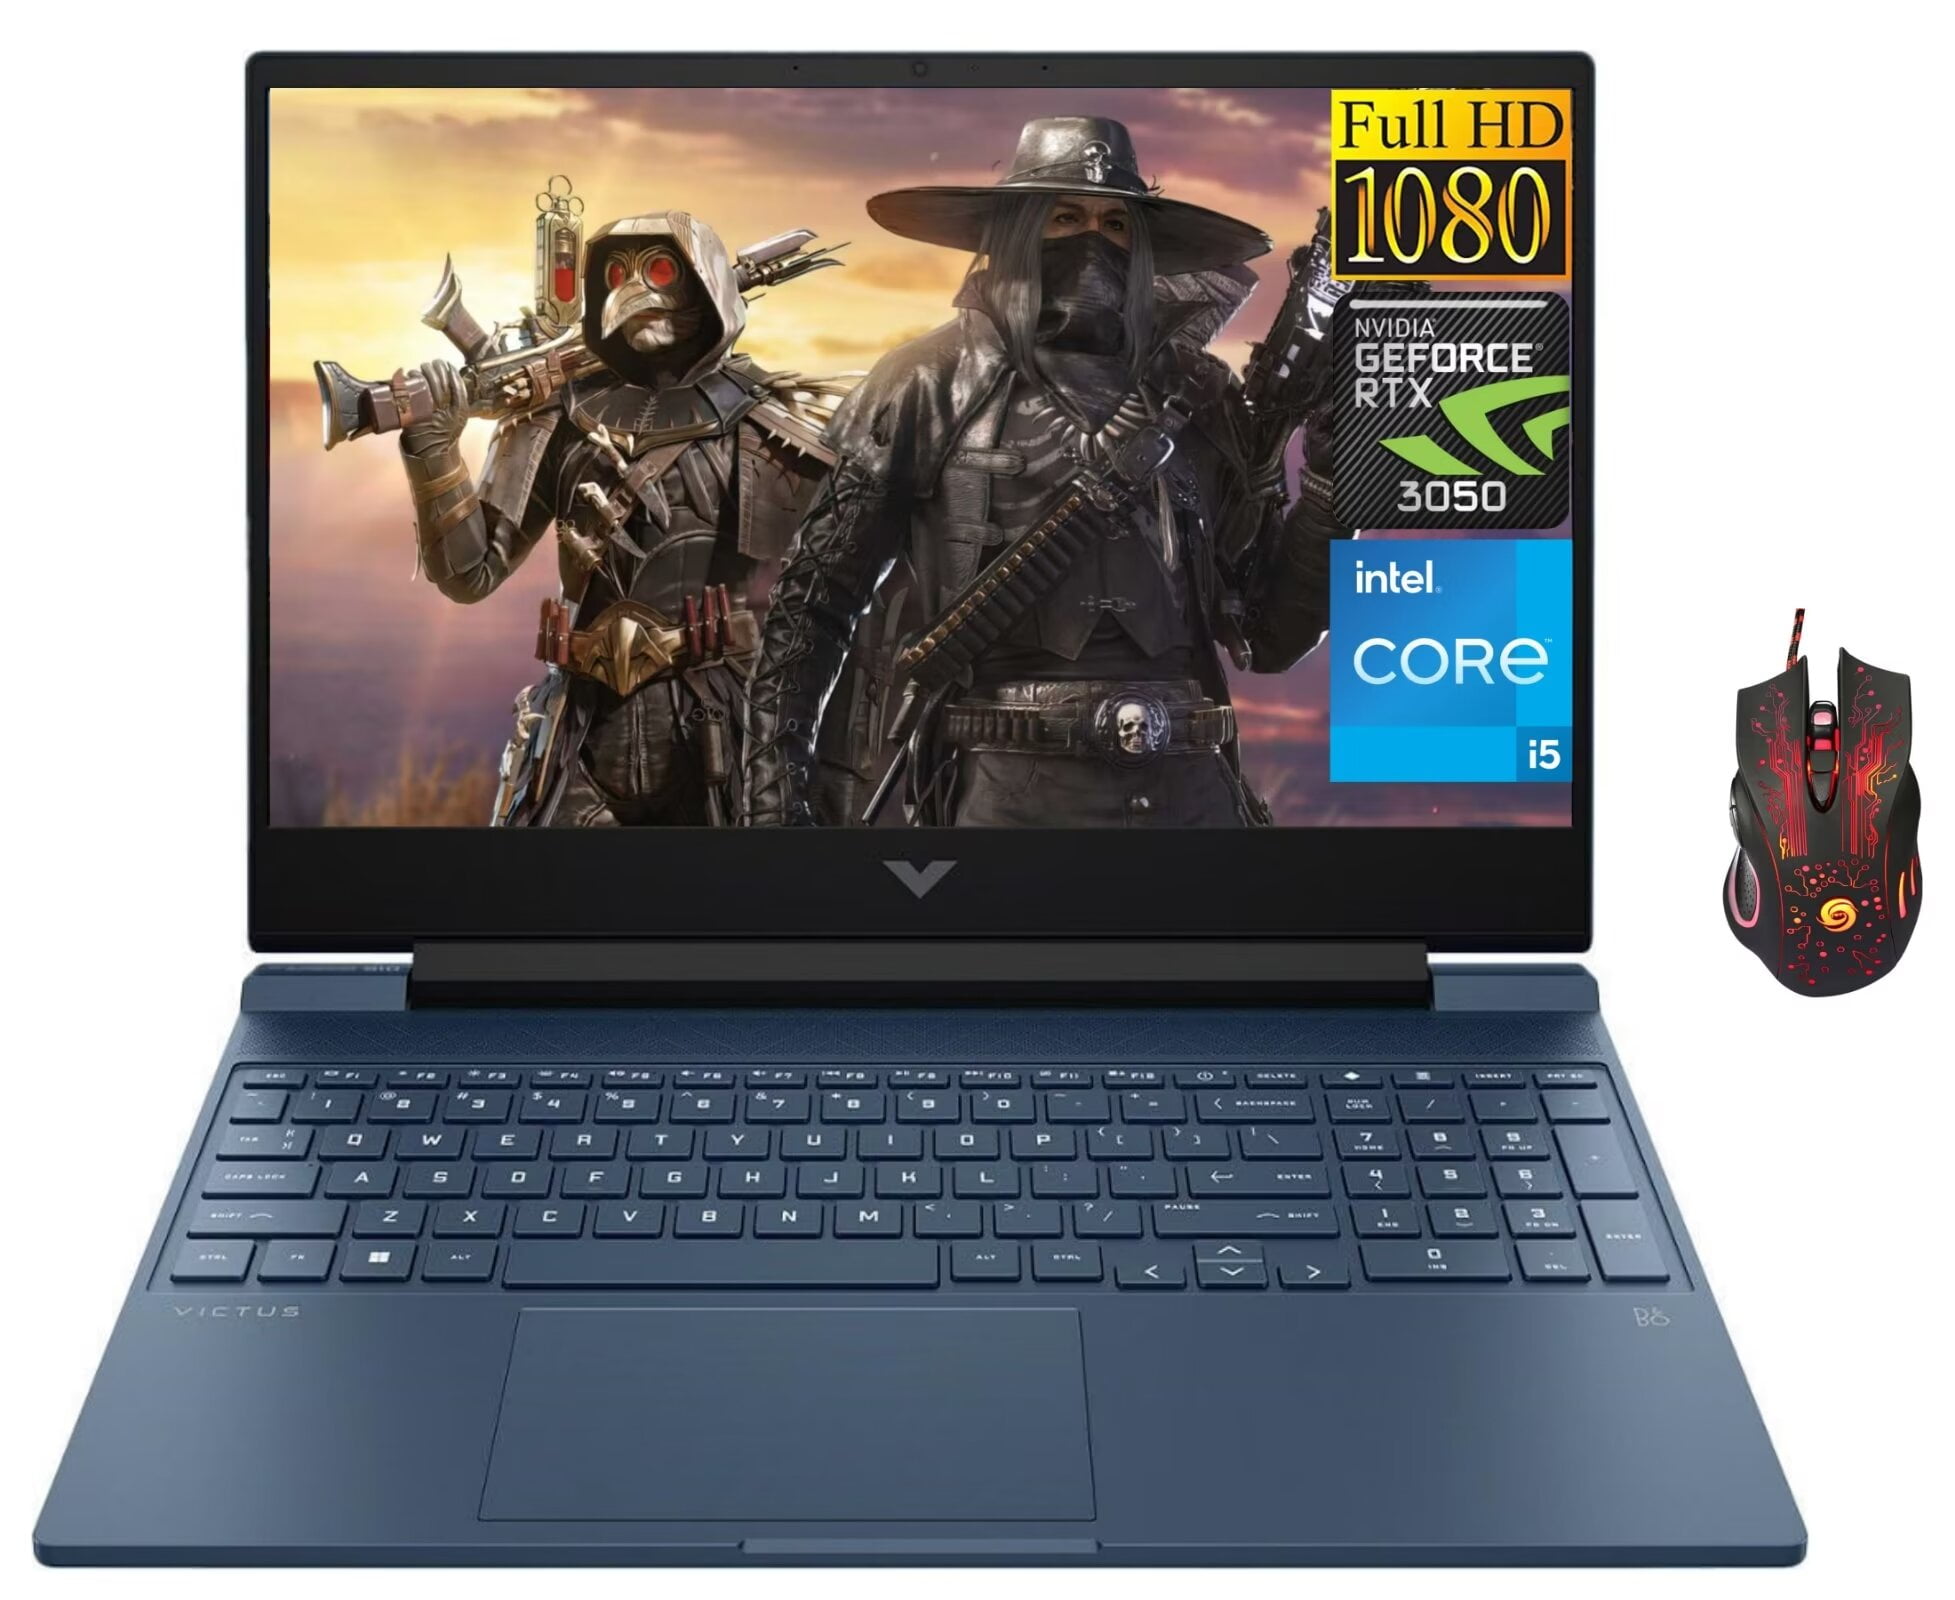 HP Latest 2020 Pavilion Gaming Laptop 15.6 FHD 1080p Core i5-9300H NVIDIA  GTX 1050 3GB 8GB RAM 256GB SSD Windows 10